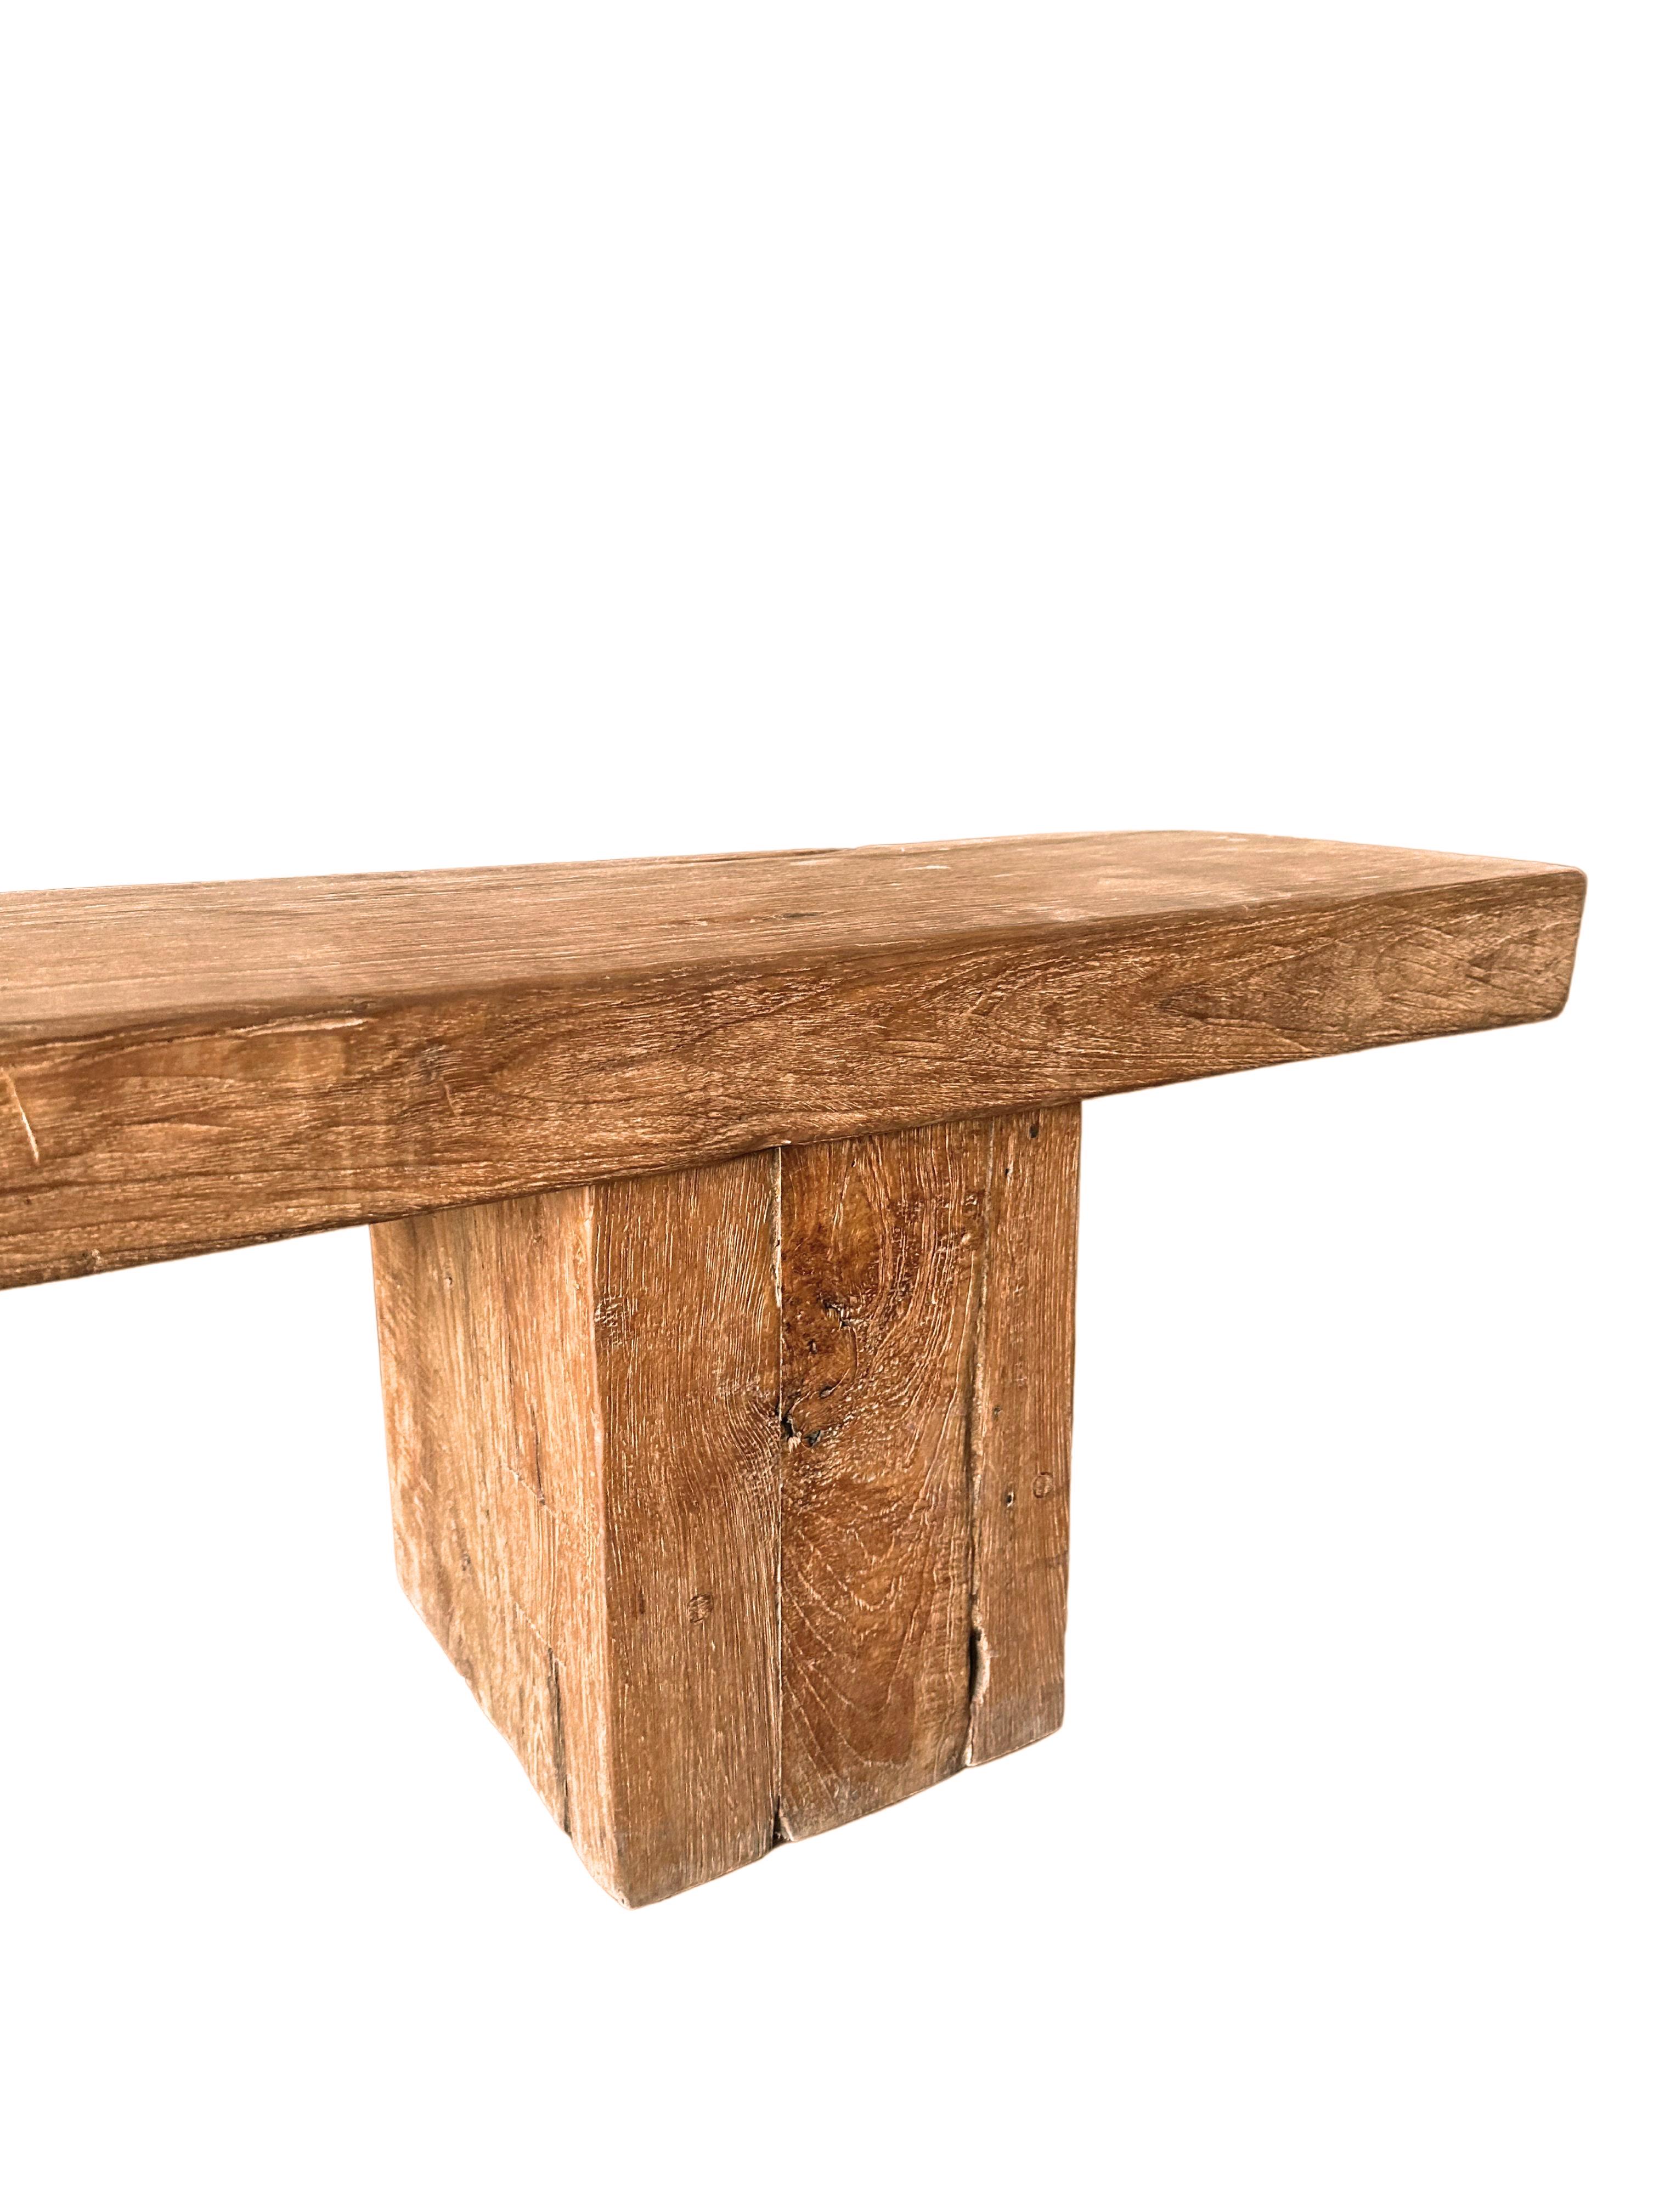 Other Solid Teak Wood Sculptural Bench, Modern Organic For Sale